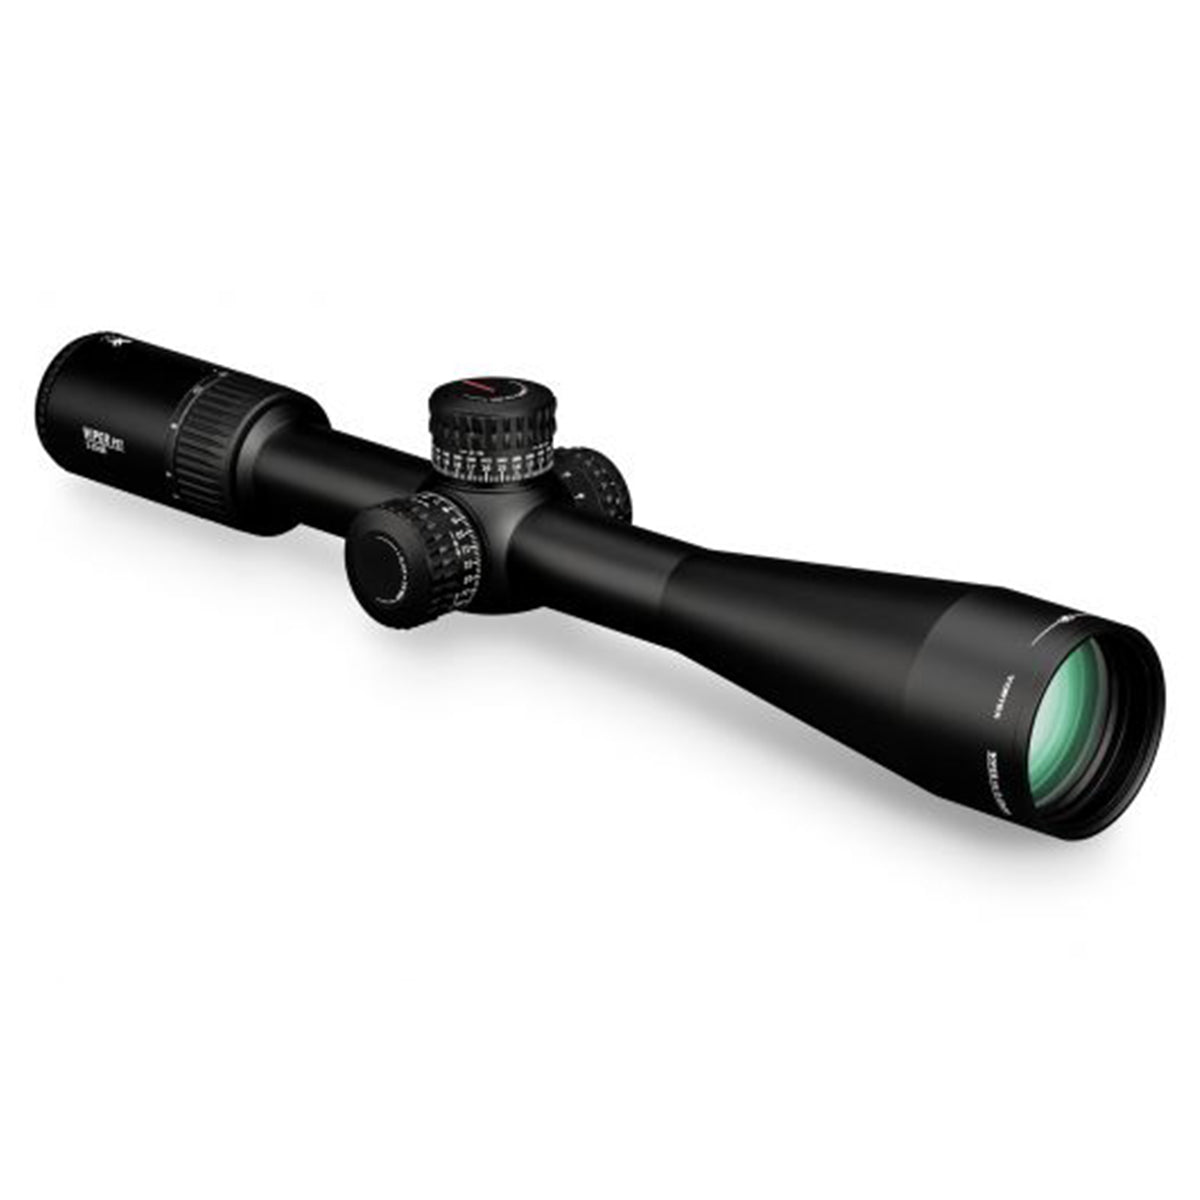 Vortex Viper PST Gen II 5-25x50 FFP MOA Riflescope by Vortex Optics | Optics - goHUNT Shop